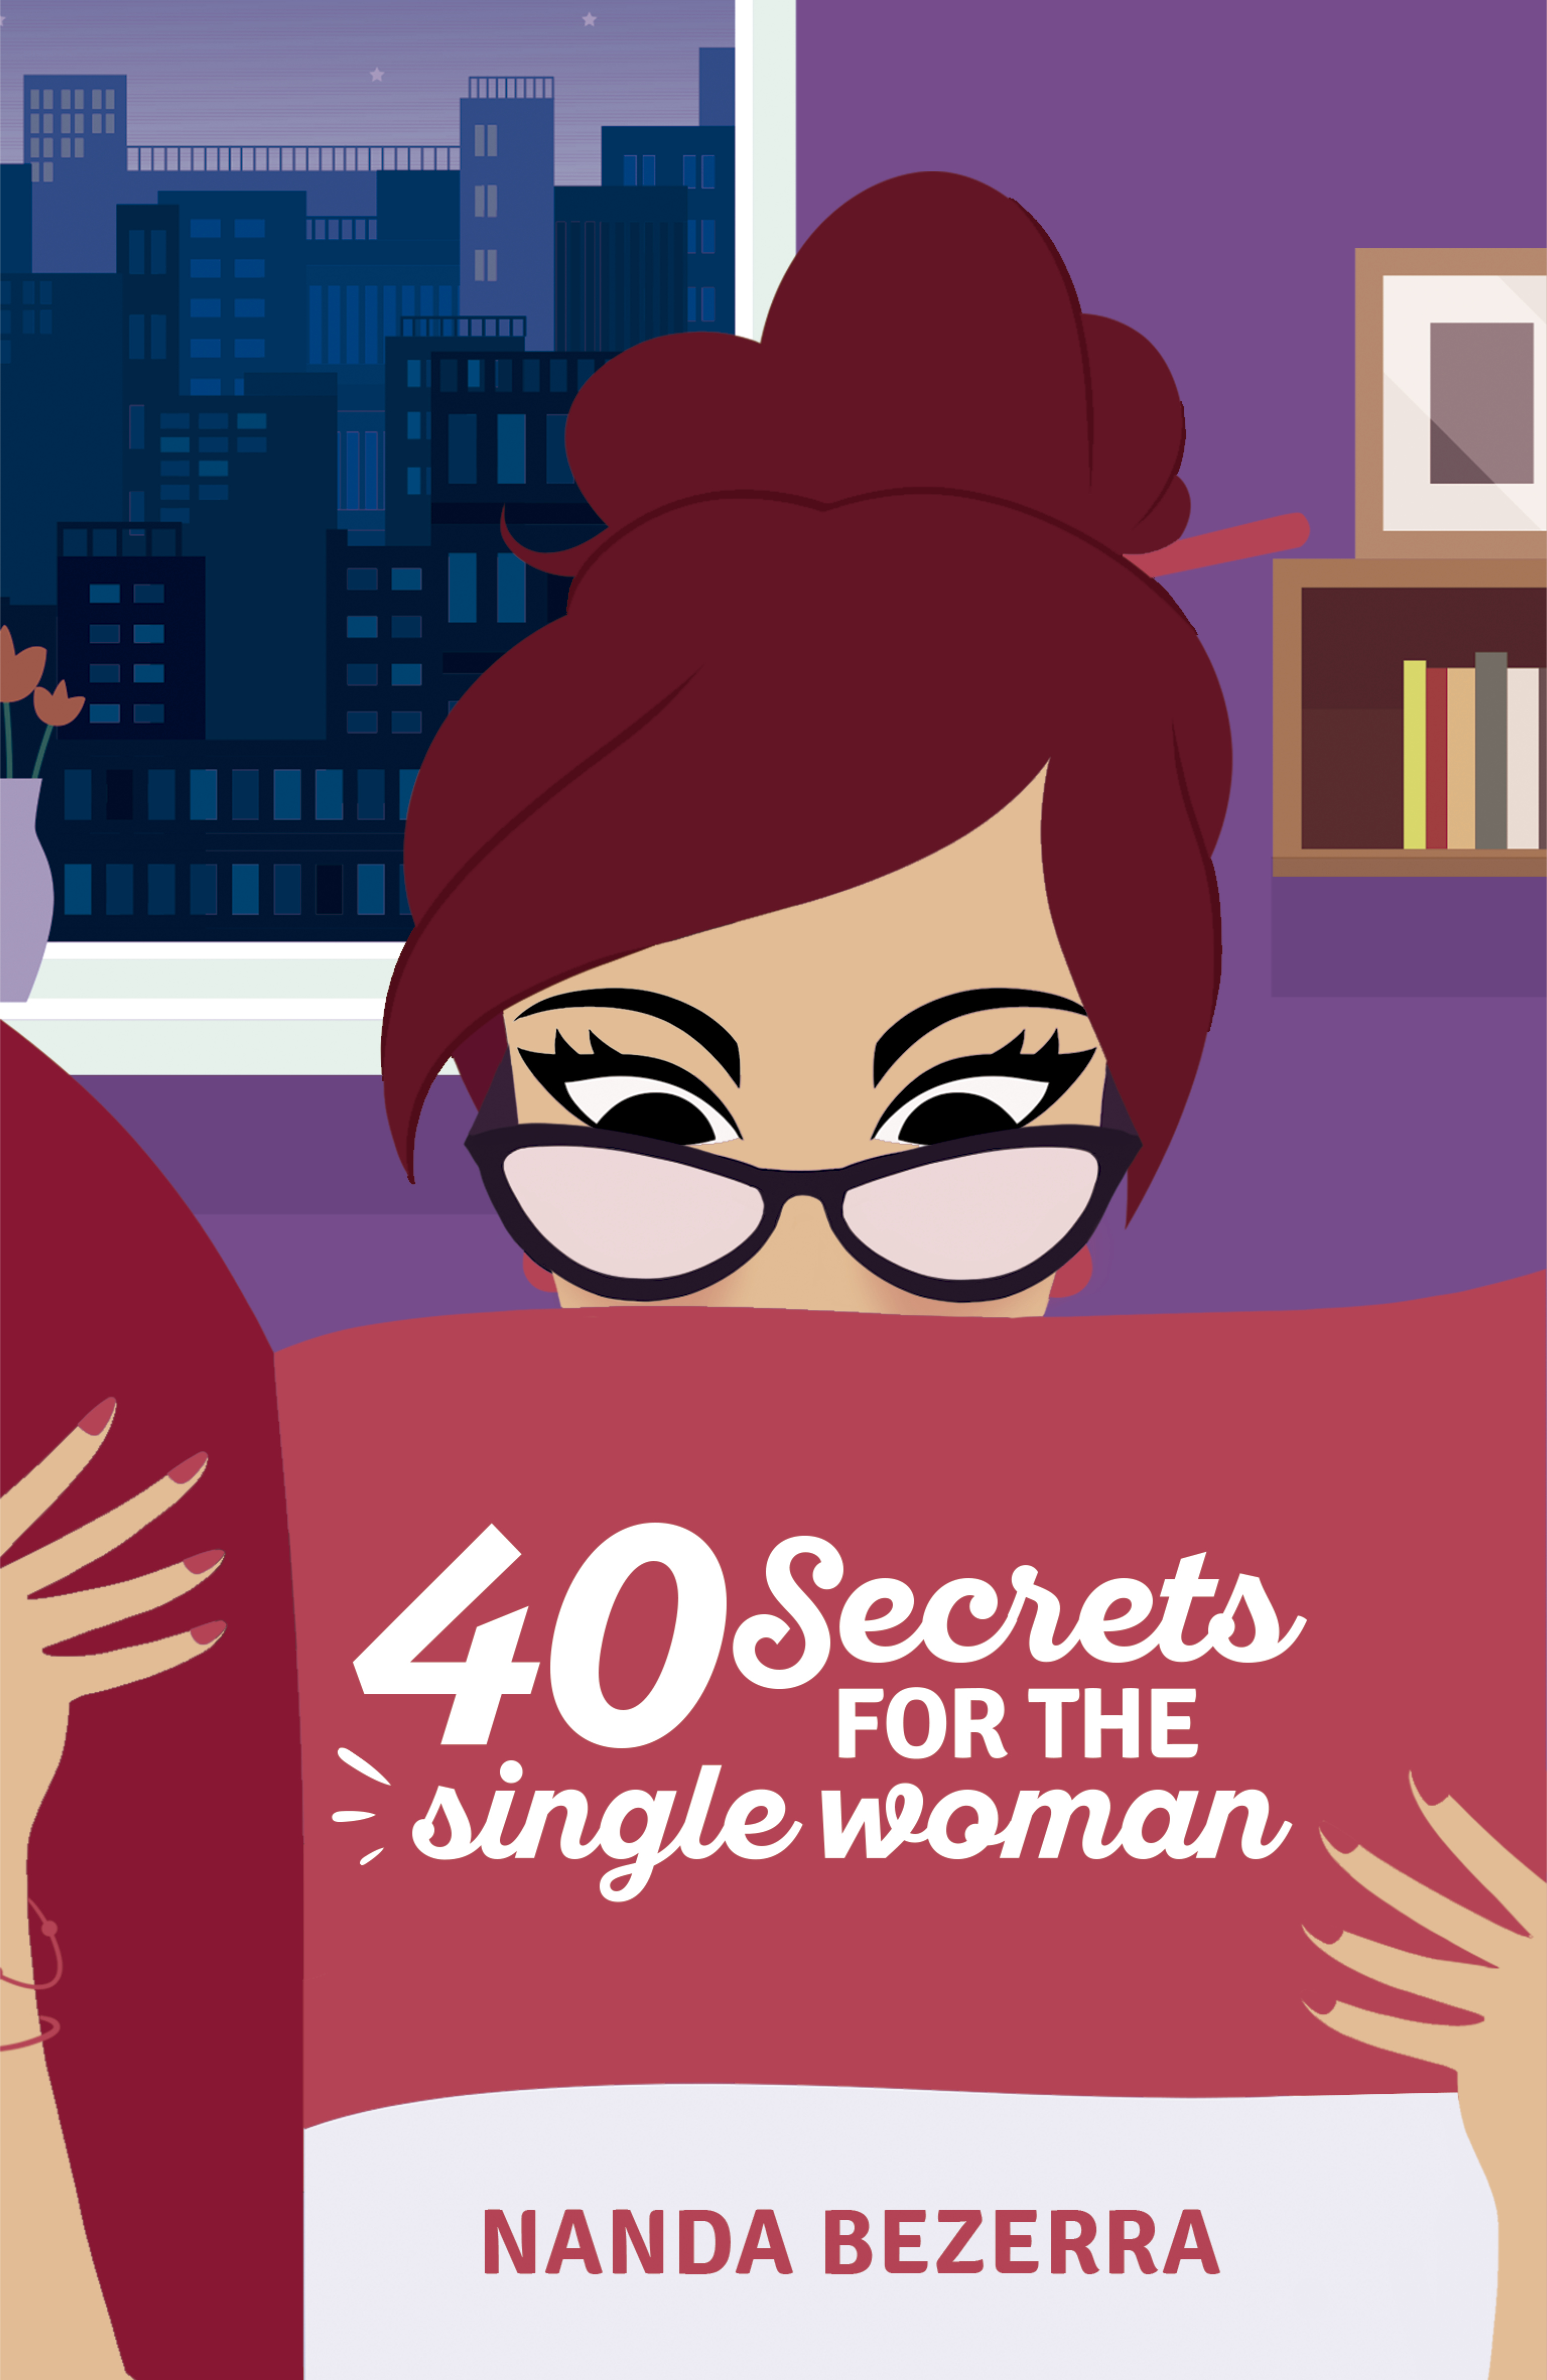 40 secrets for the single woman